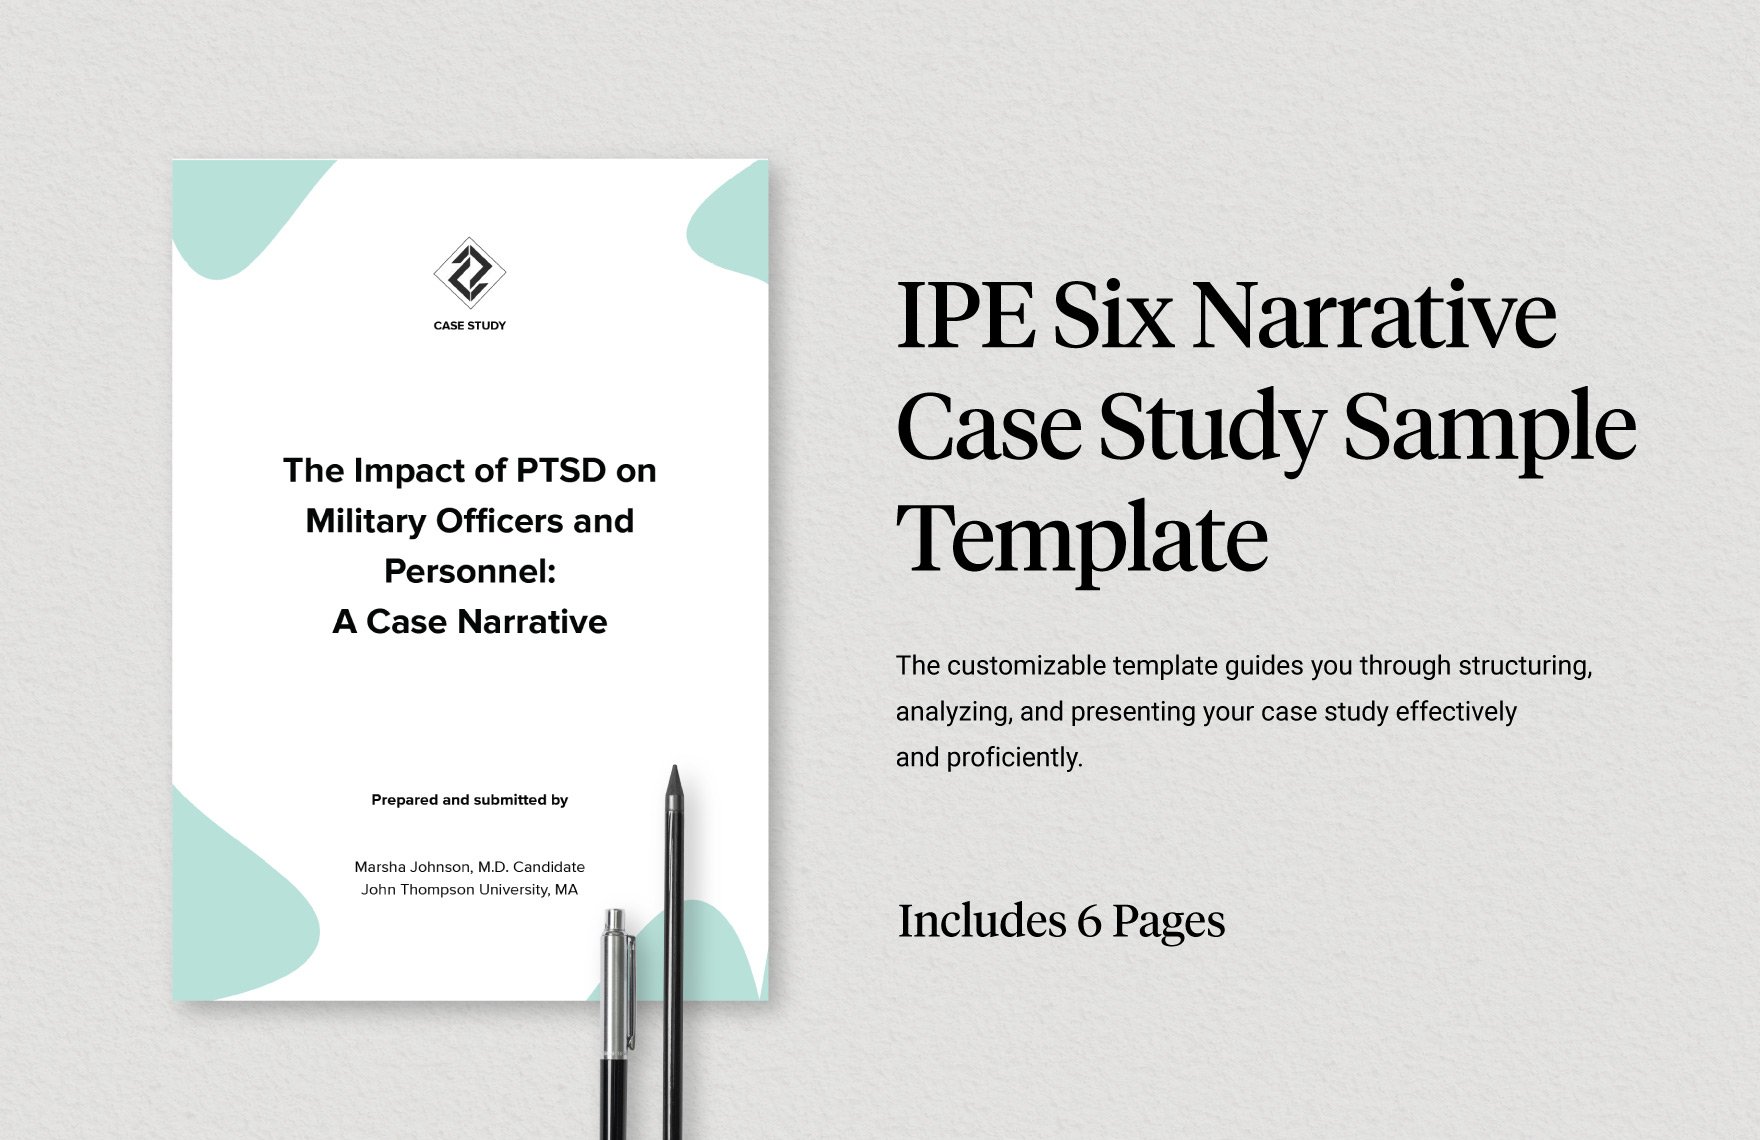 IPE Six Narrative Case Study Sample Template